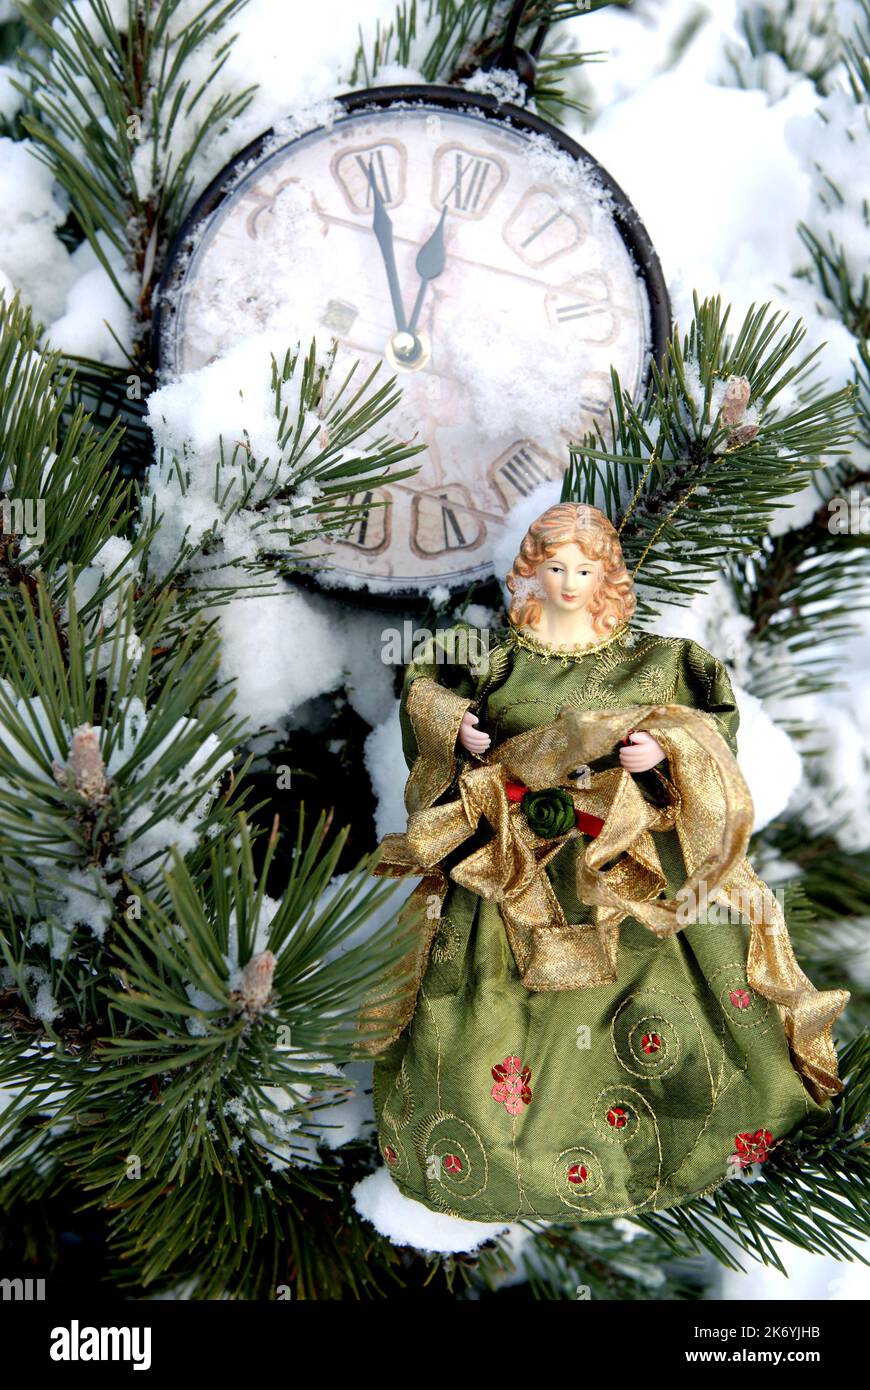 Miniature Christmas Ornaments Stock Photo - Image of santa, snow: 47755048